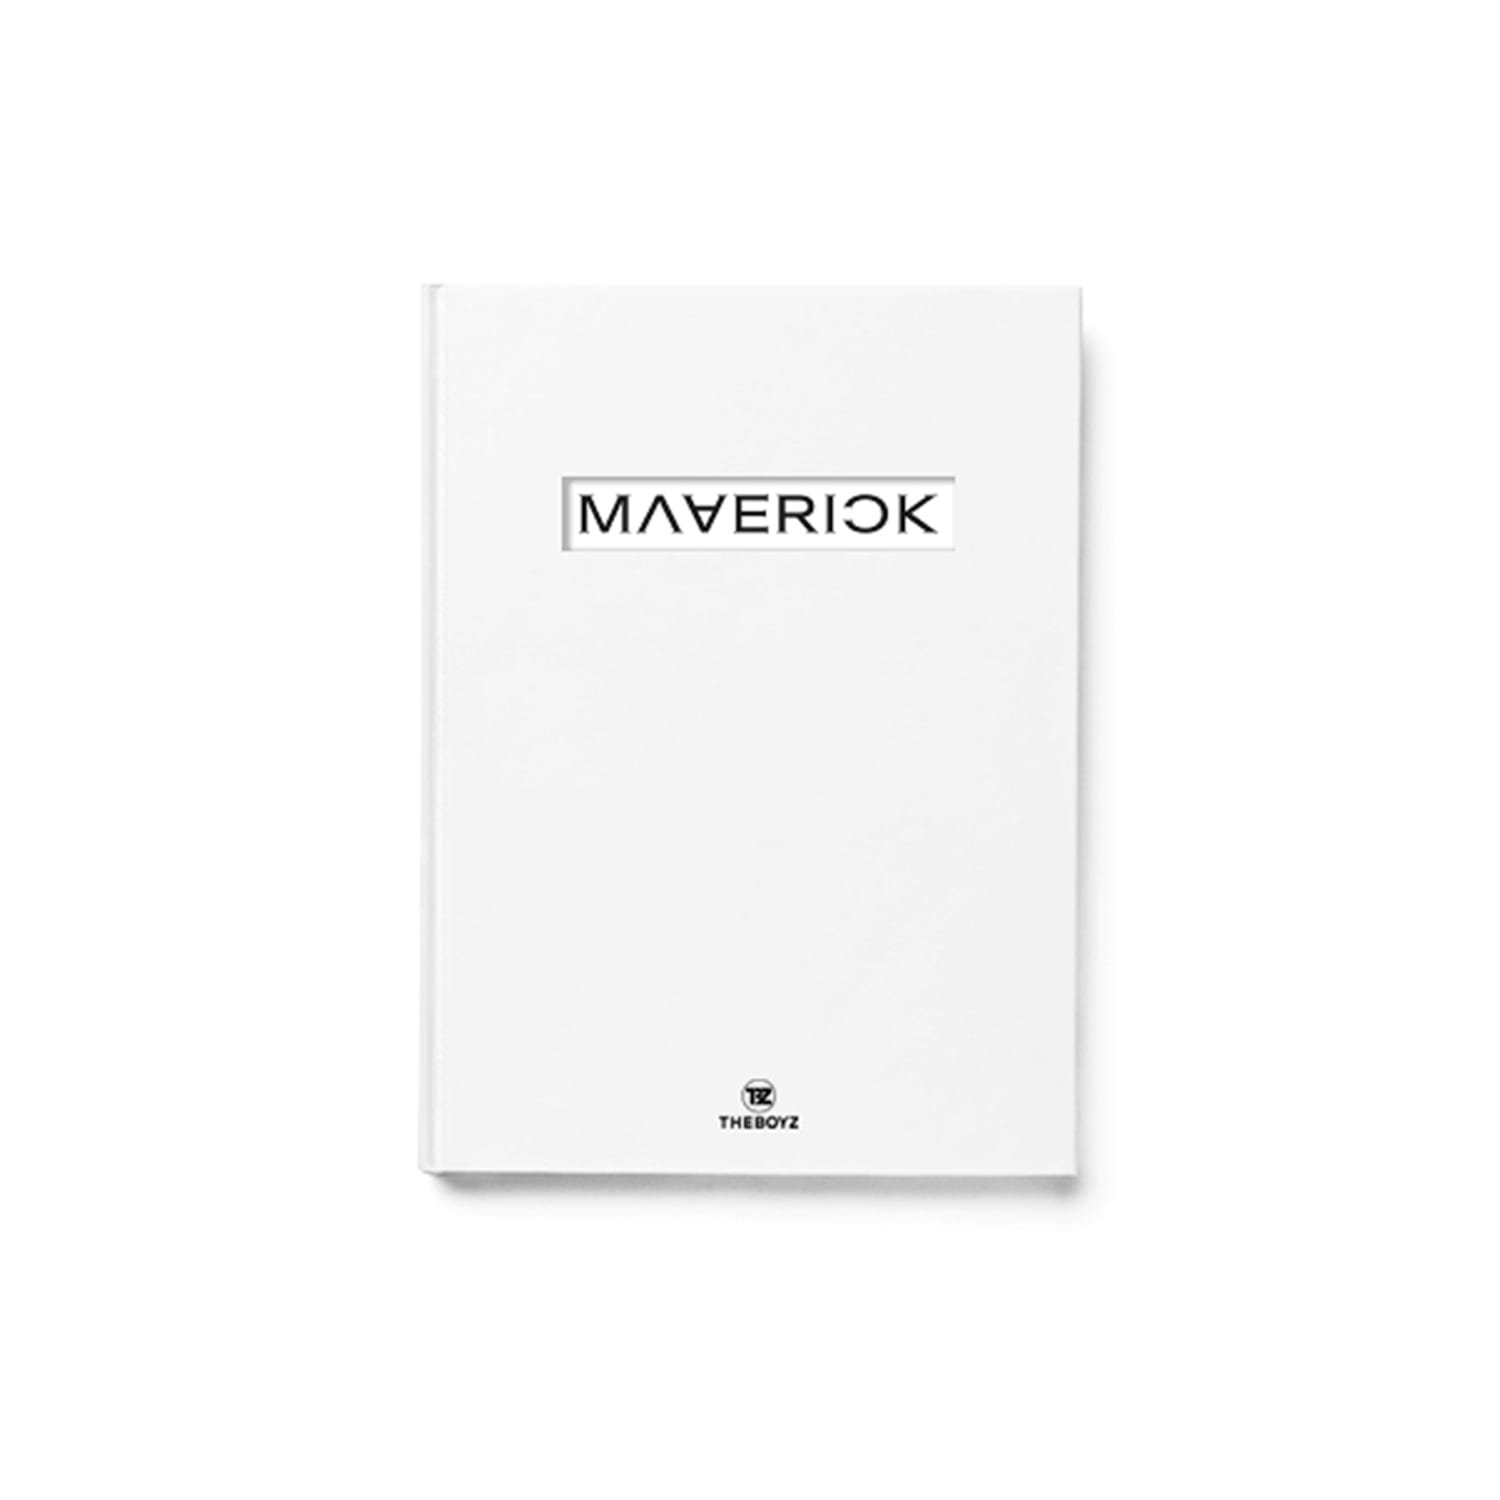 THE BOYZ - Single Album Vol.3 [MAVERICK] (MOOD Ver.)케이팝스토어(kpop store)